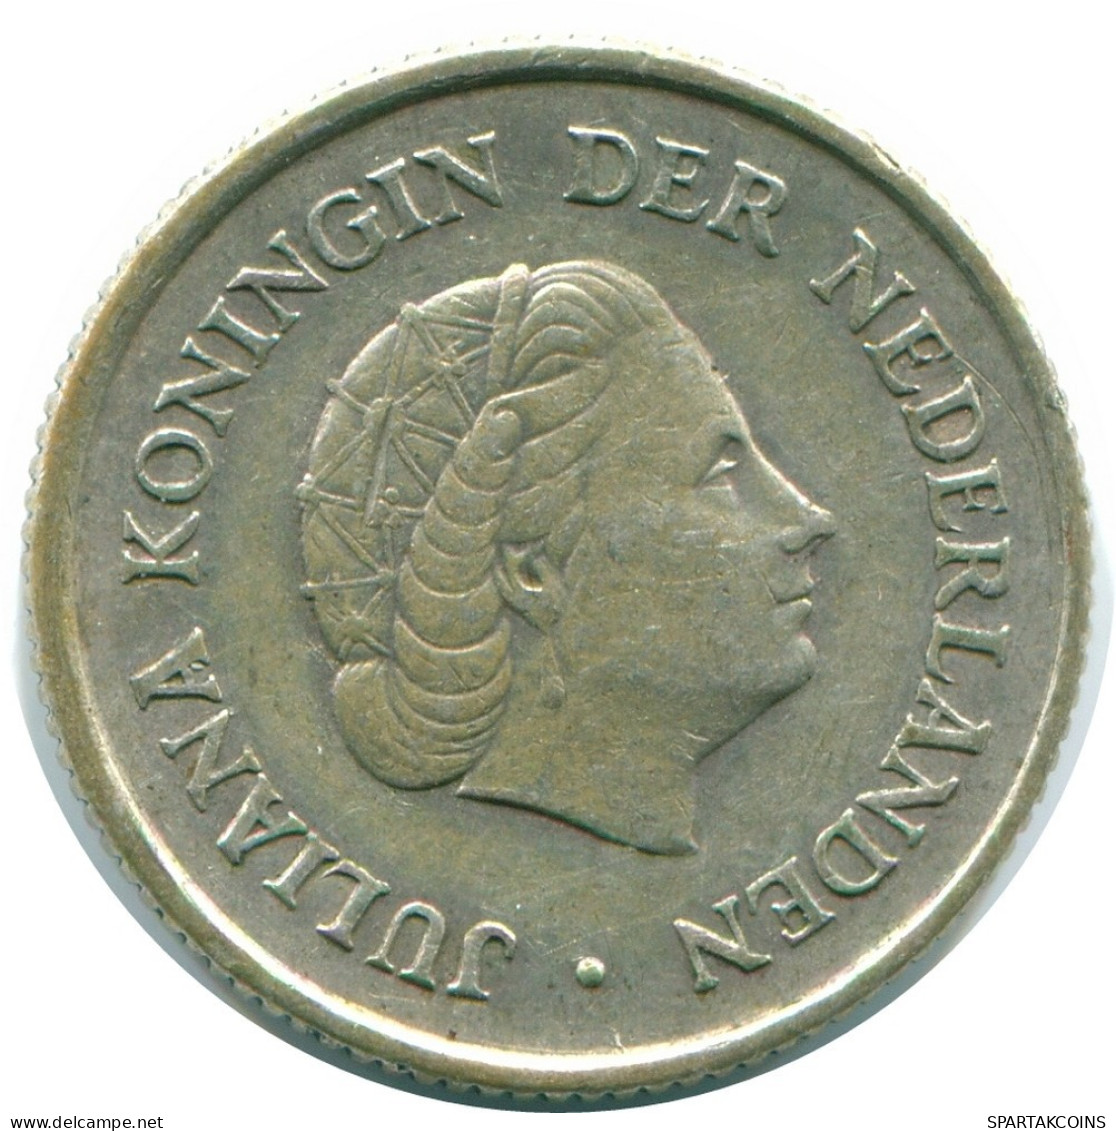 1/4 GULDEN 1967 NETHERLANDS ANTILLES SILVER Colonial Coin #NL11524.4.U.A - Antillas Neerlandesas